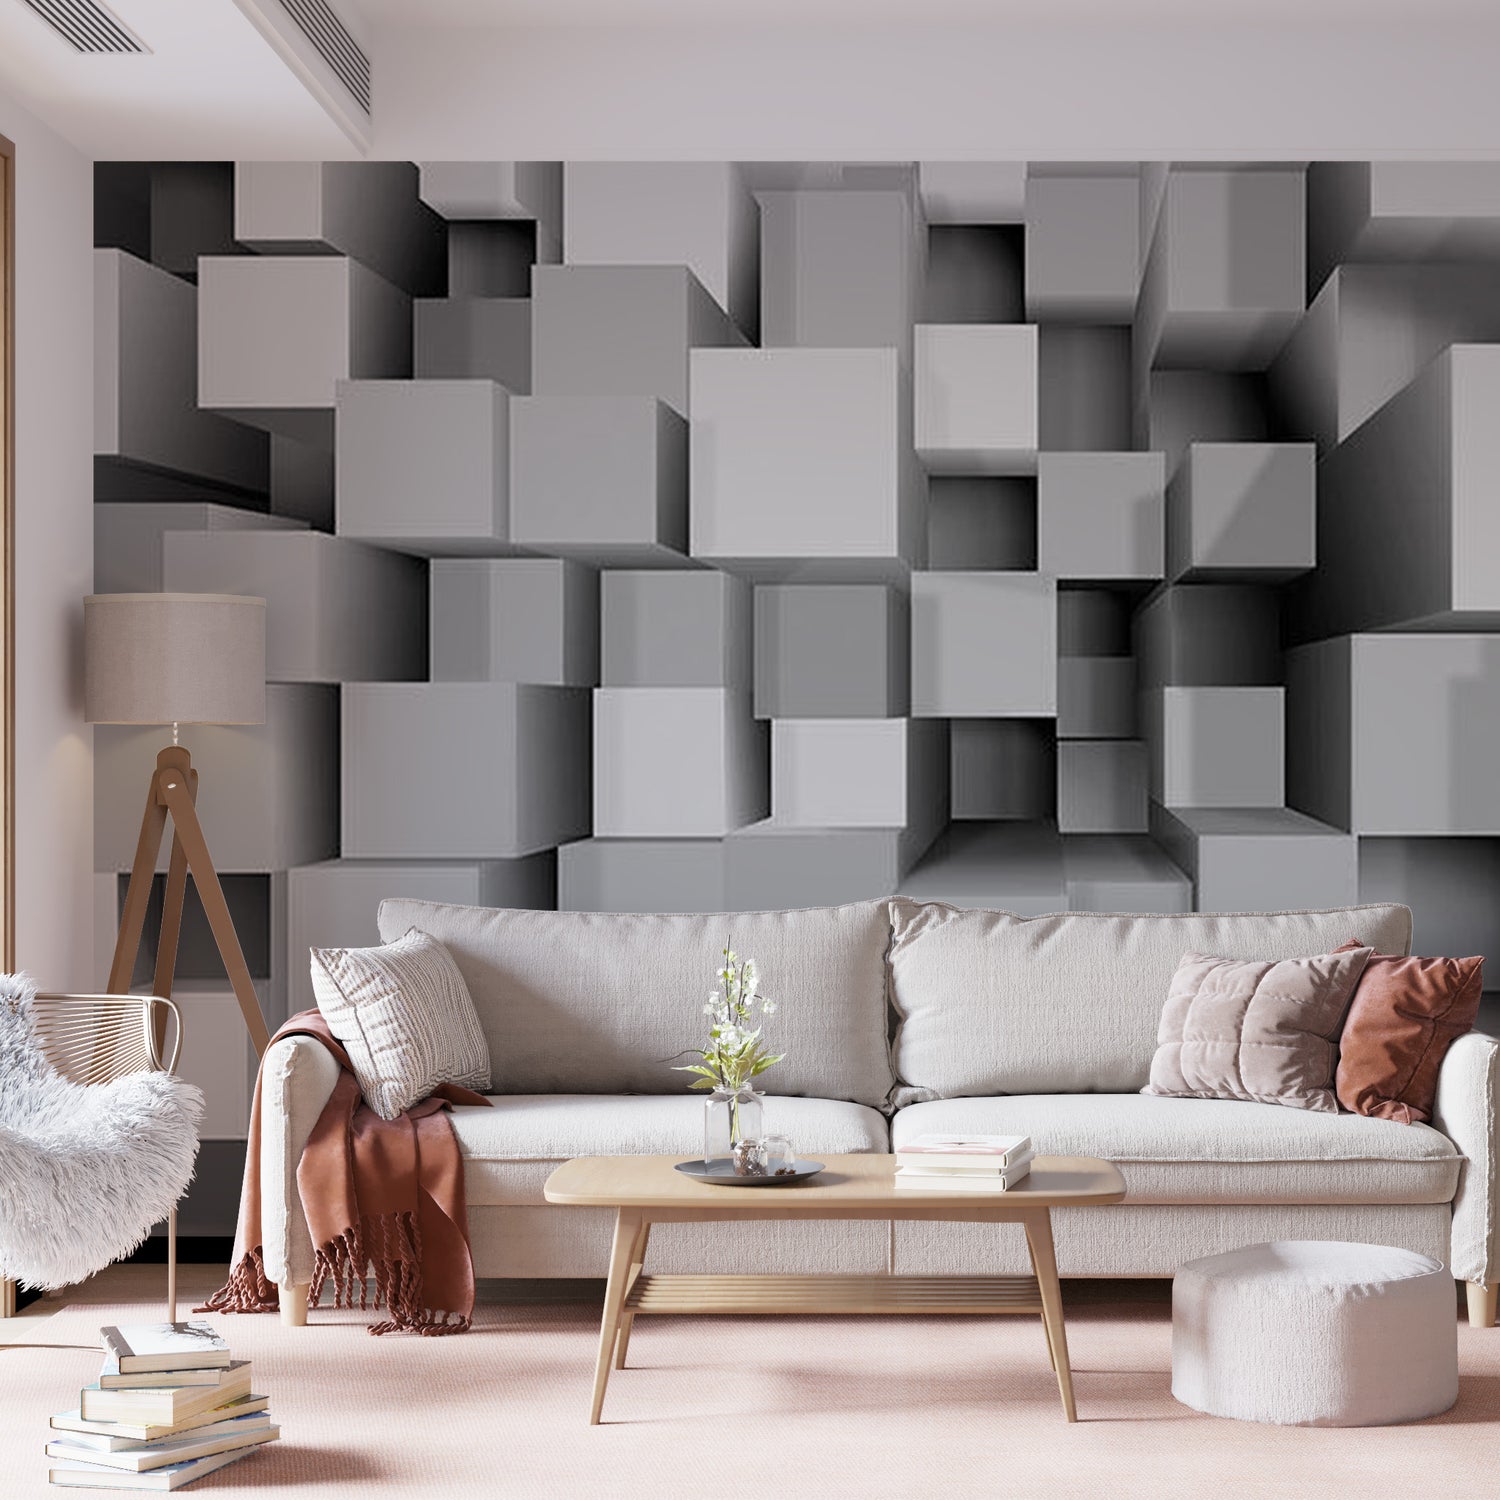 Peel & Stick 3D Illusion Wall Mural - Big Grey Blocks - Removable Wall Decals